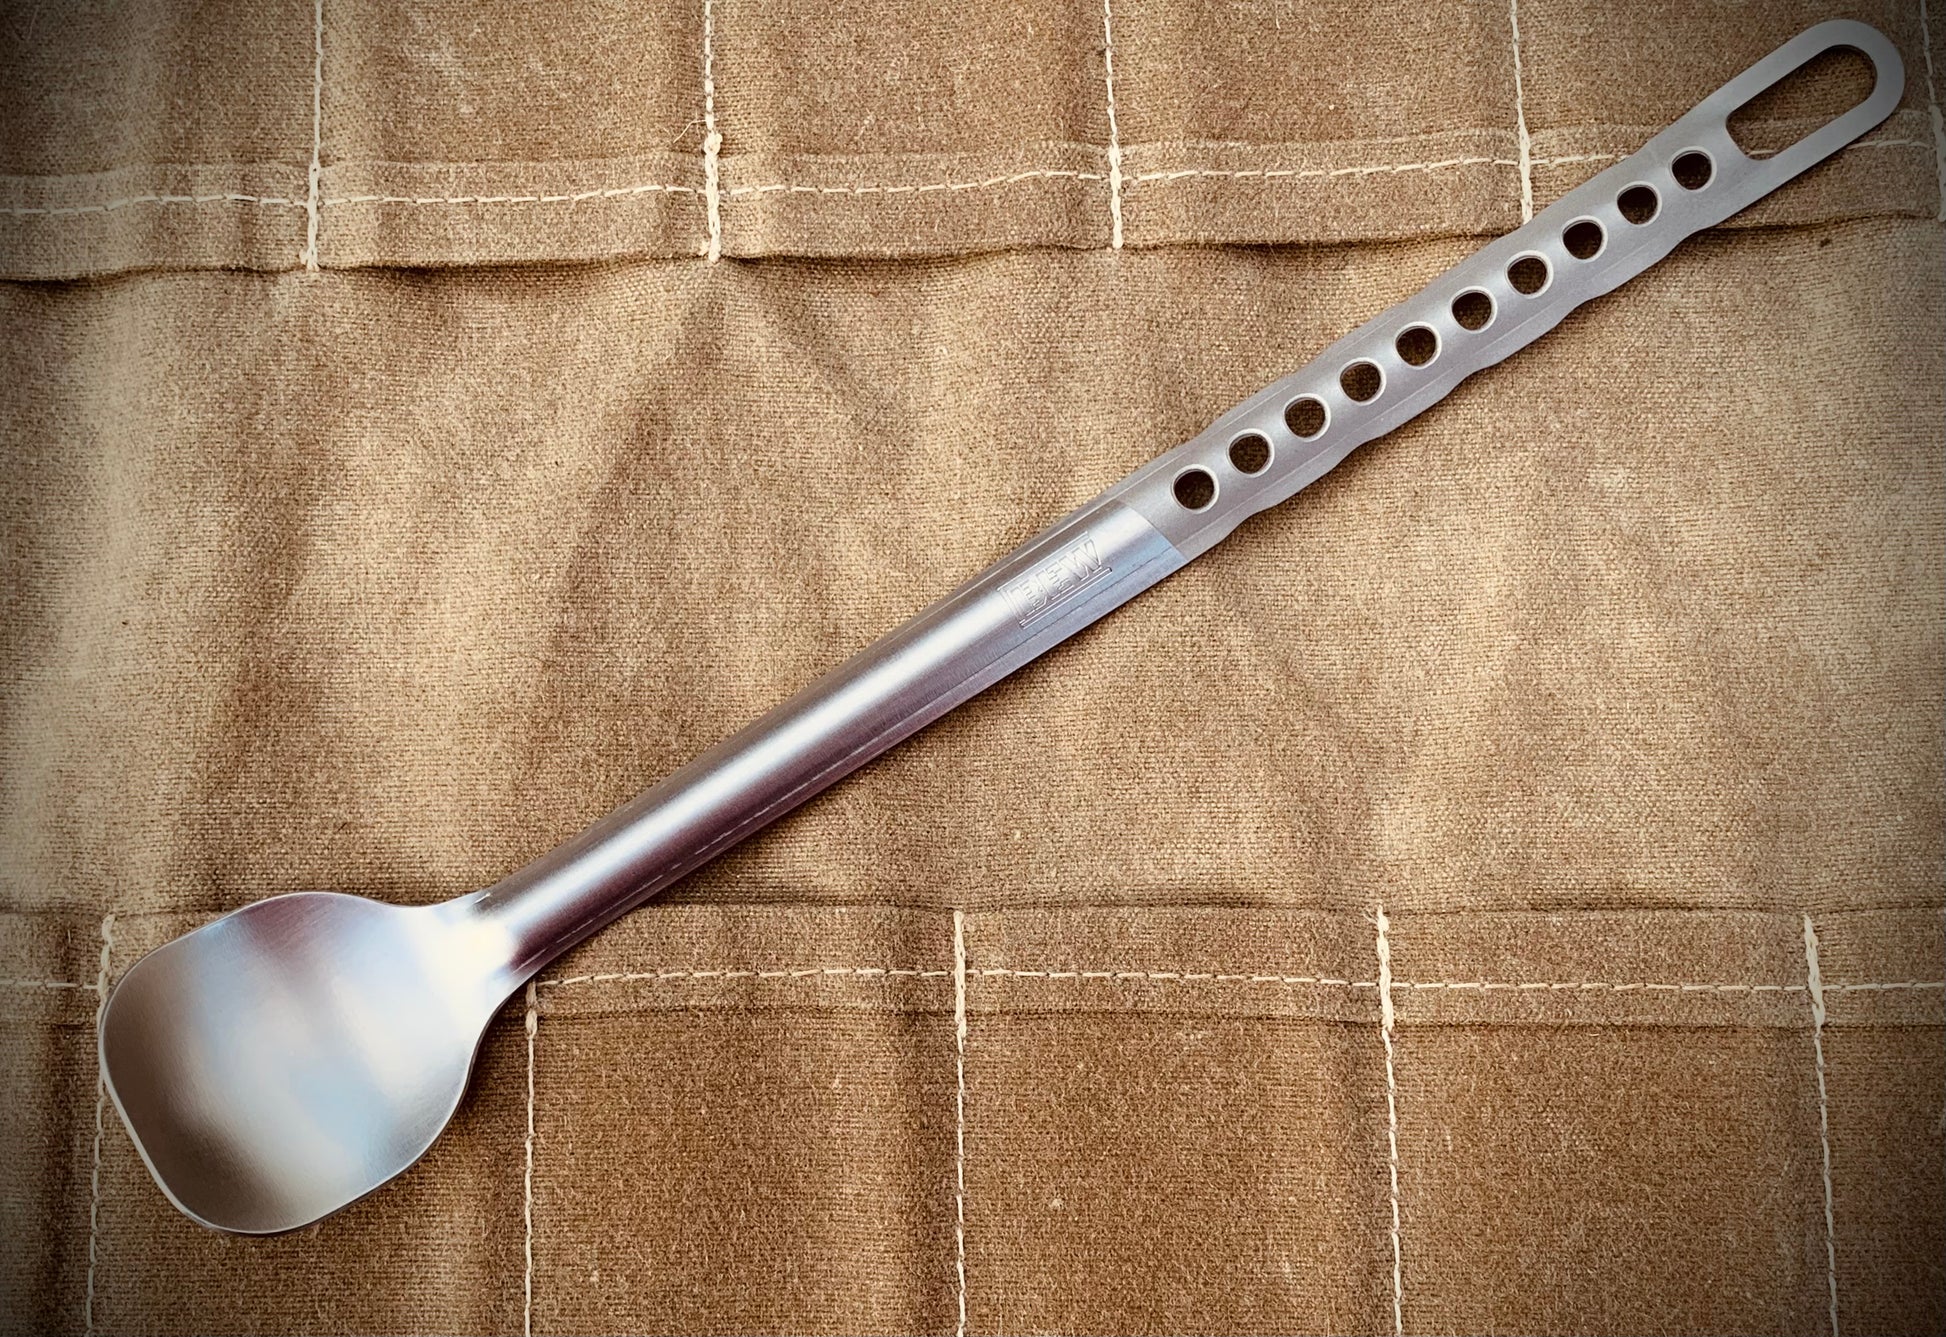 Marten Long Titanium Backpacking Spoon shown in raw titanium